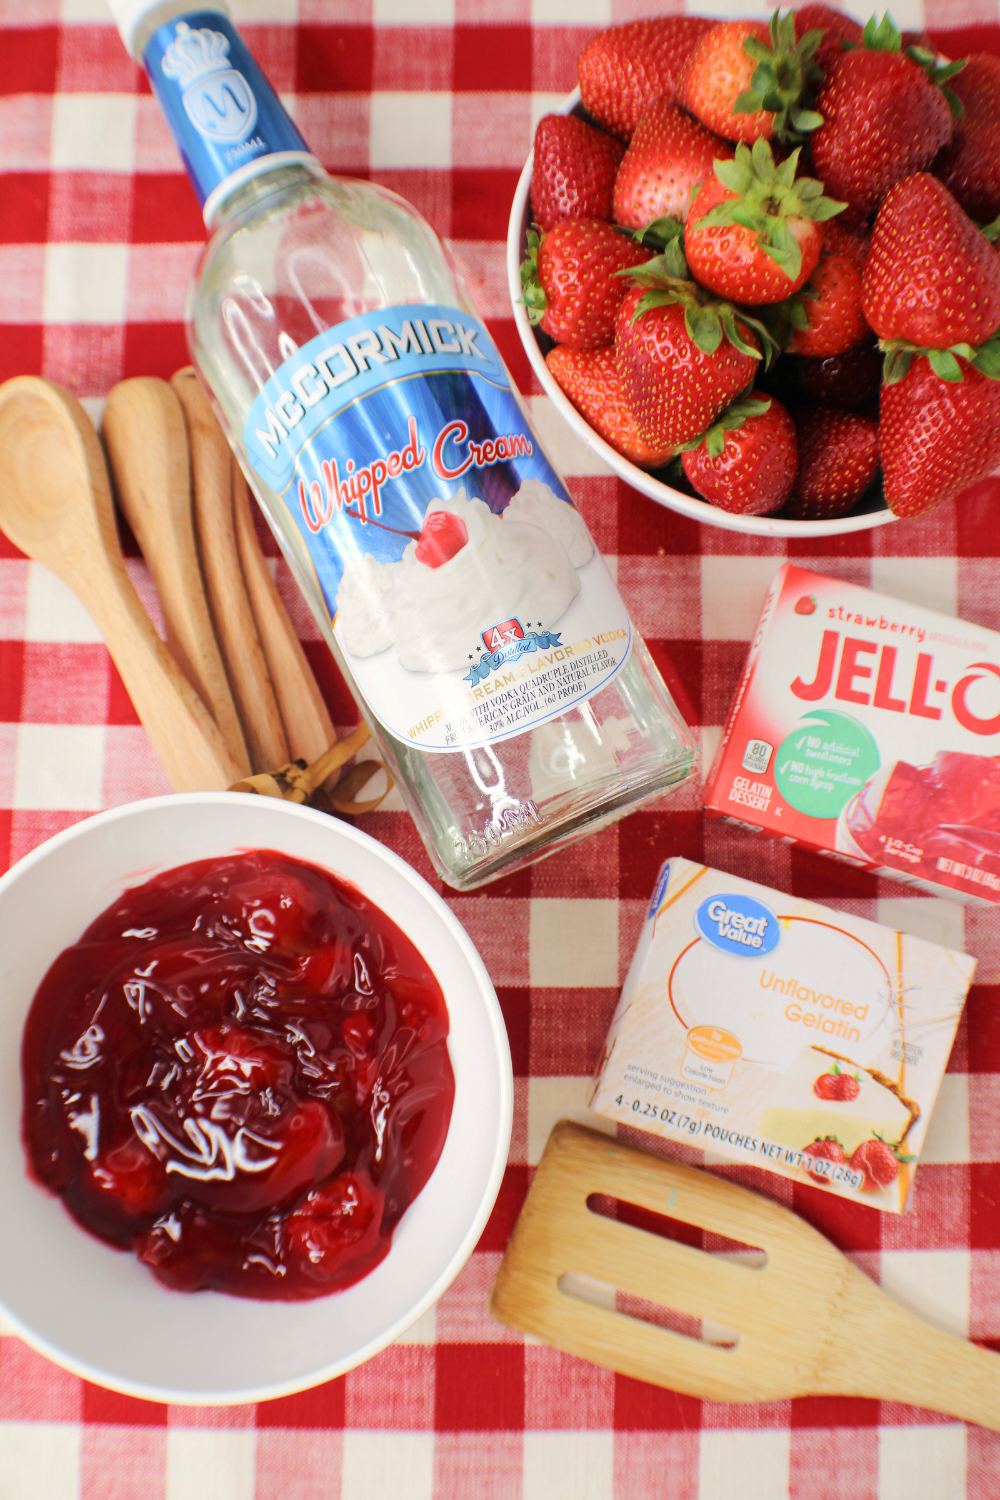 Ingredients for strawberry pie jello shots.